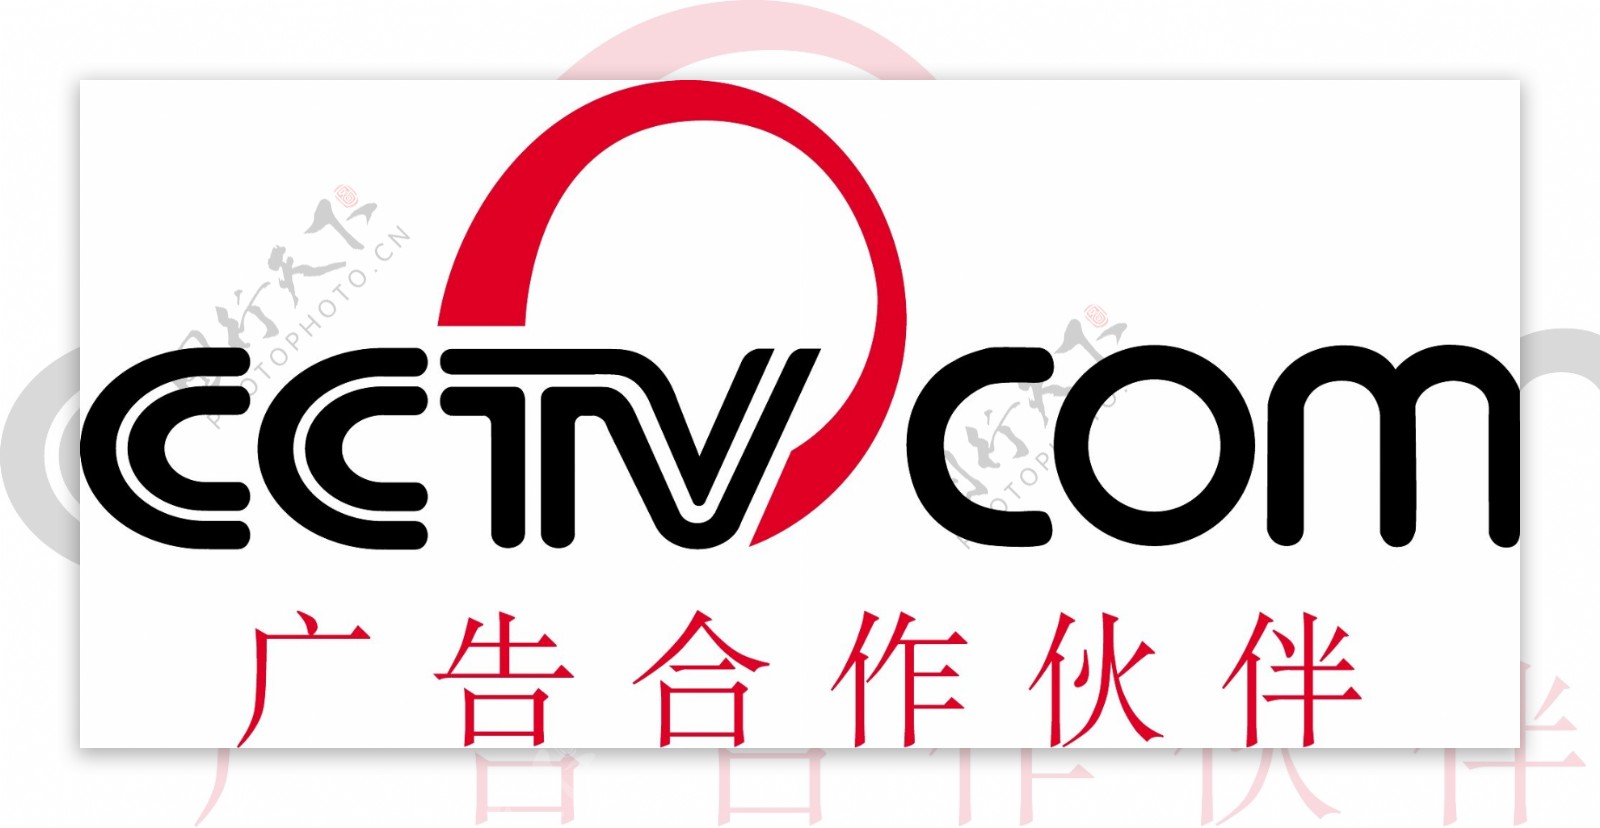 CCTV广告合作伙伴图片